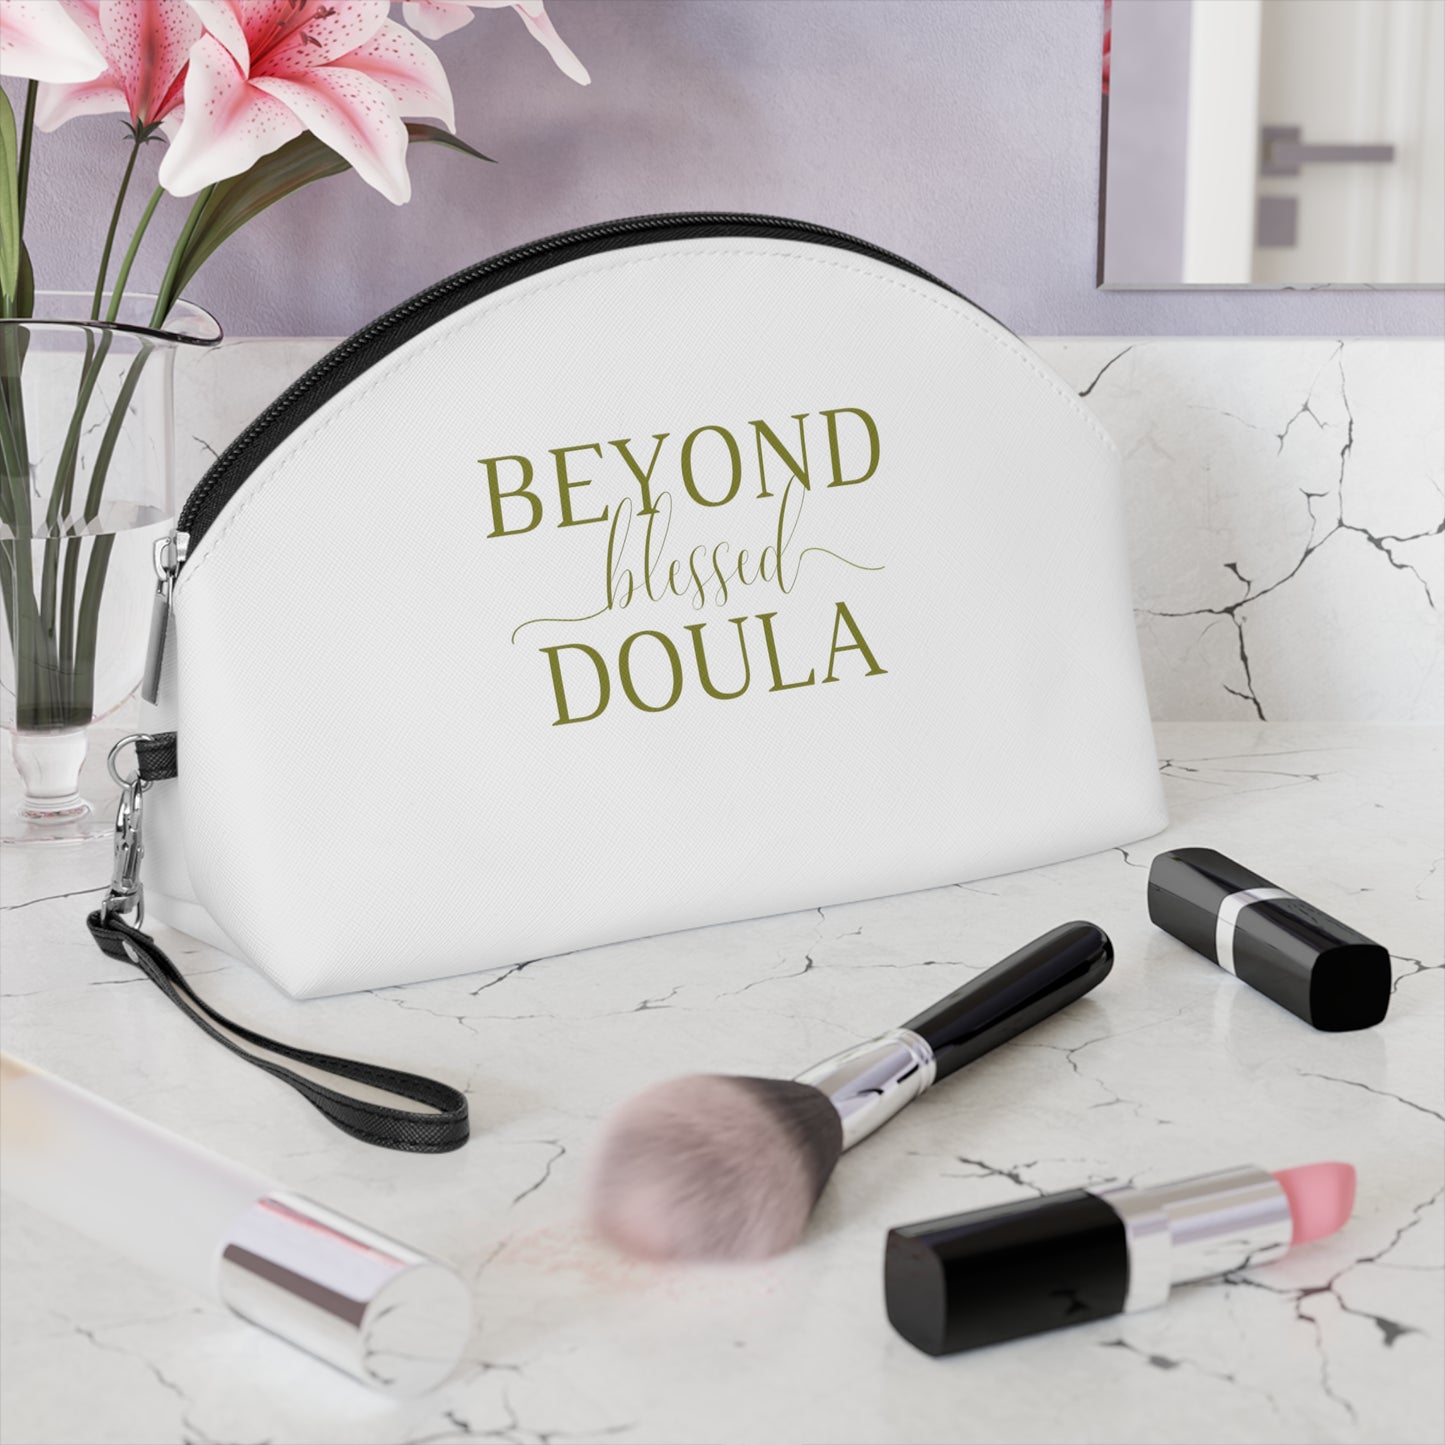 Beyond Blessed Doula - Makeup Bag